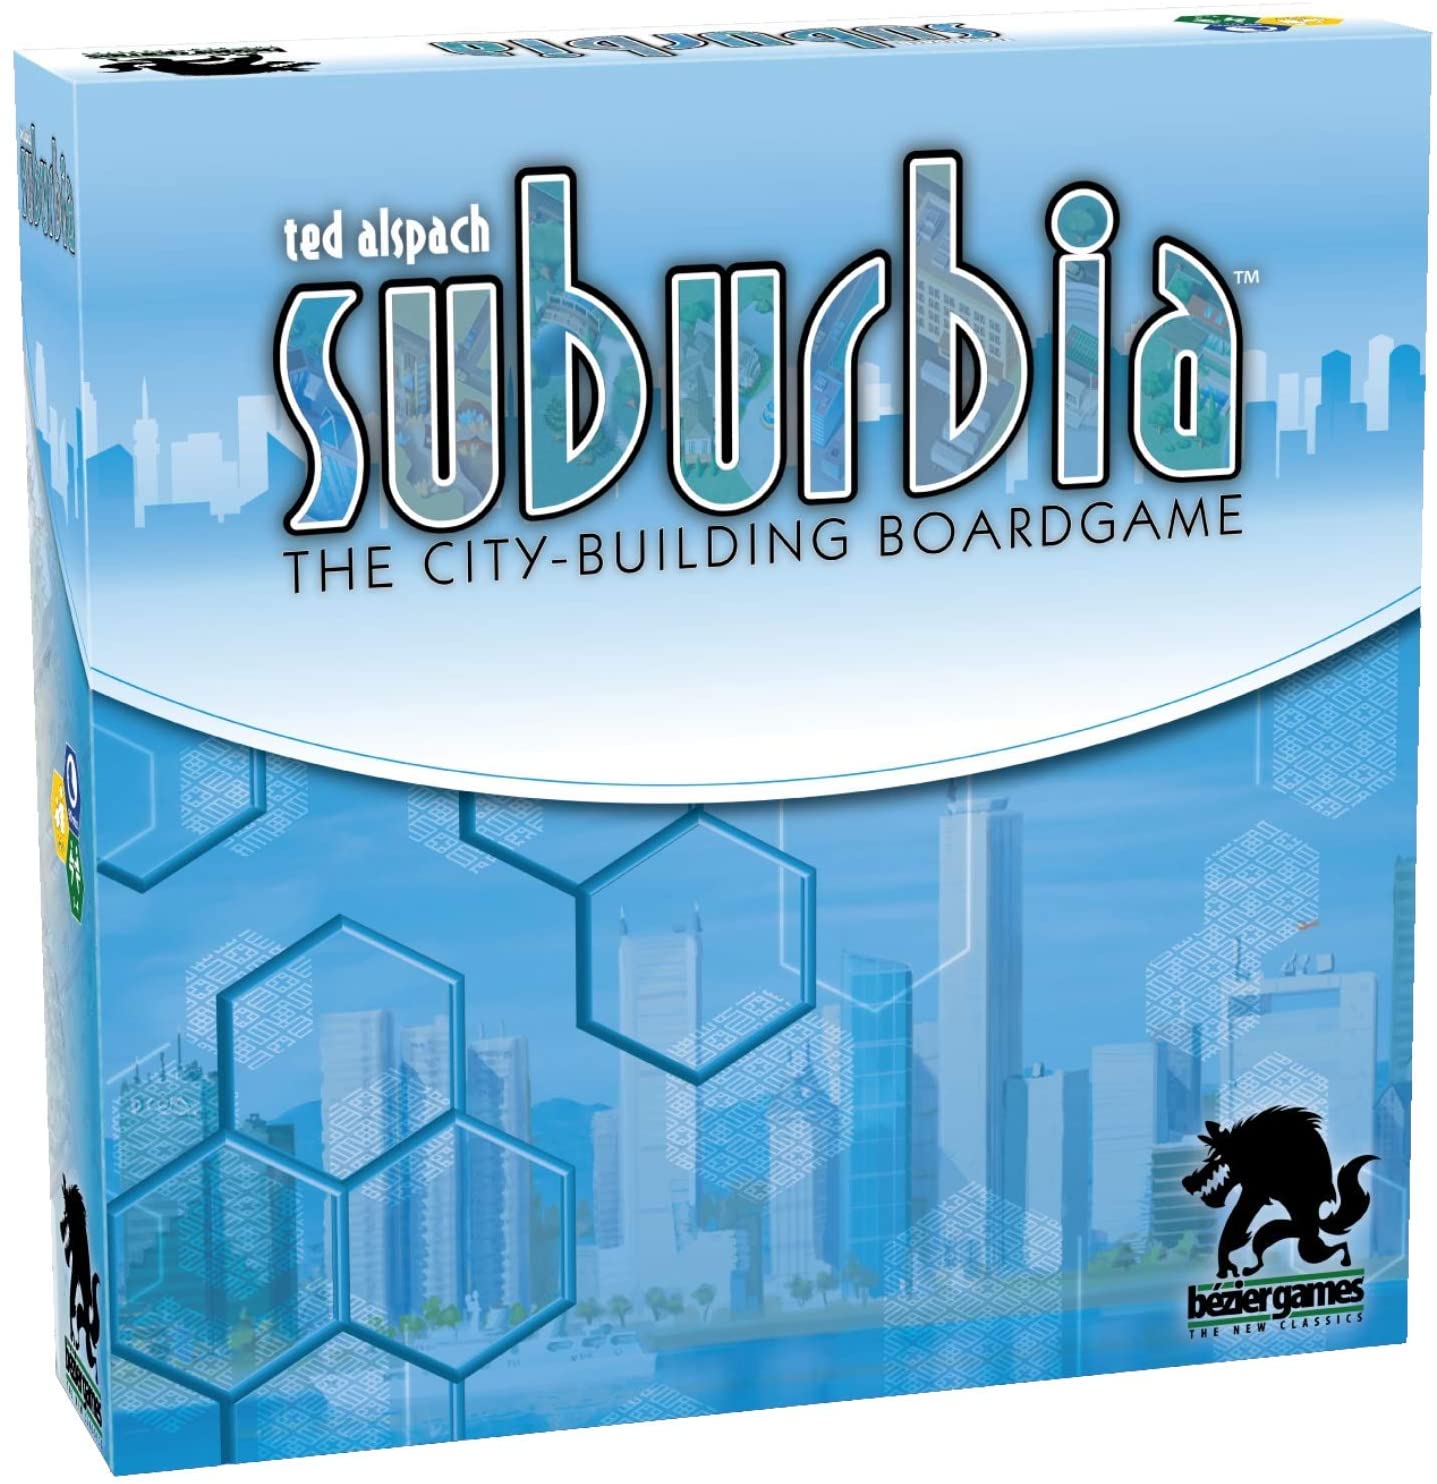 Suburbia, the City-Building Boardgame